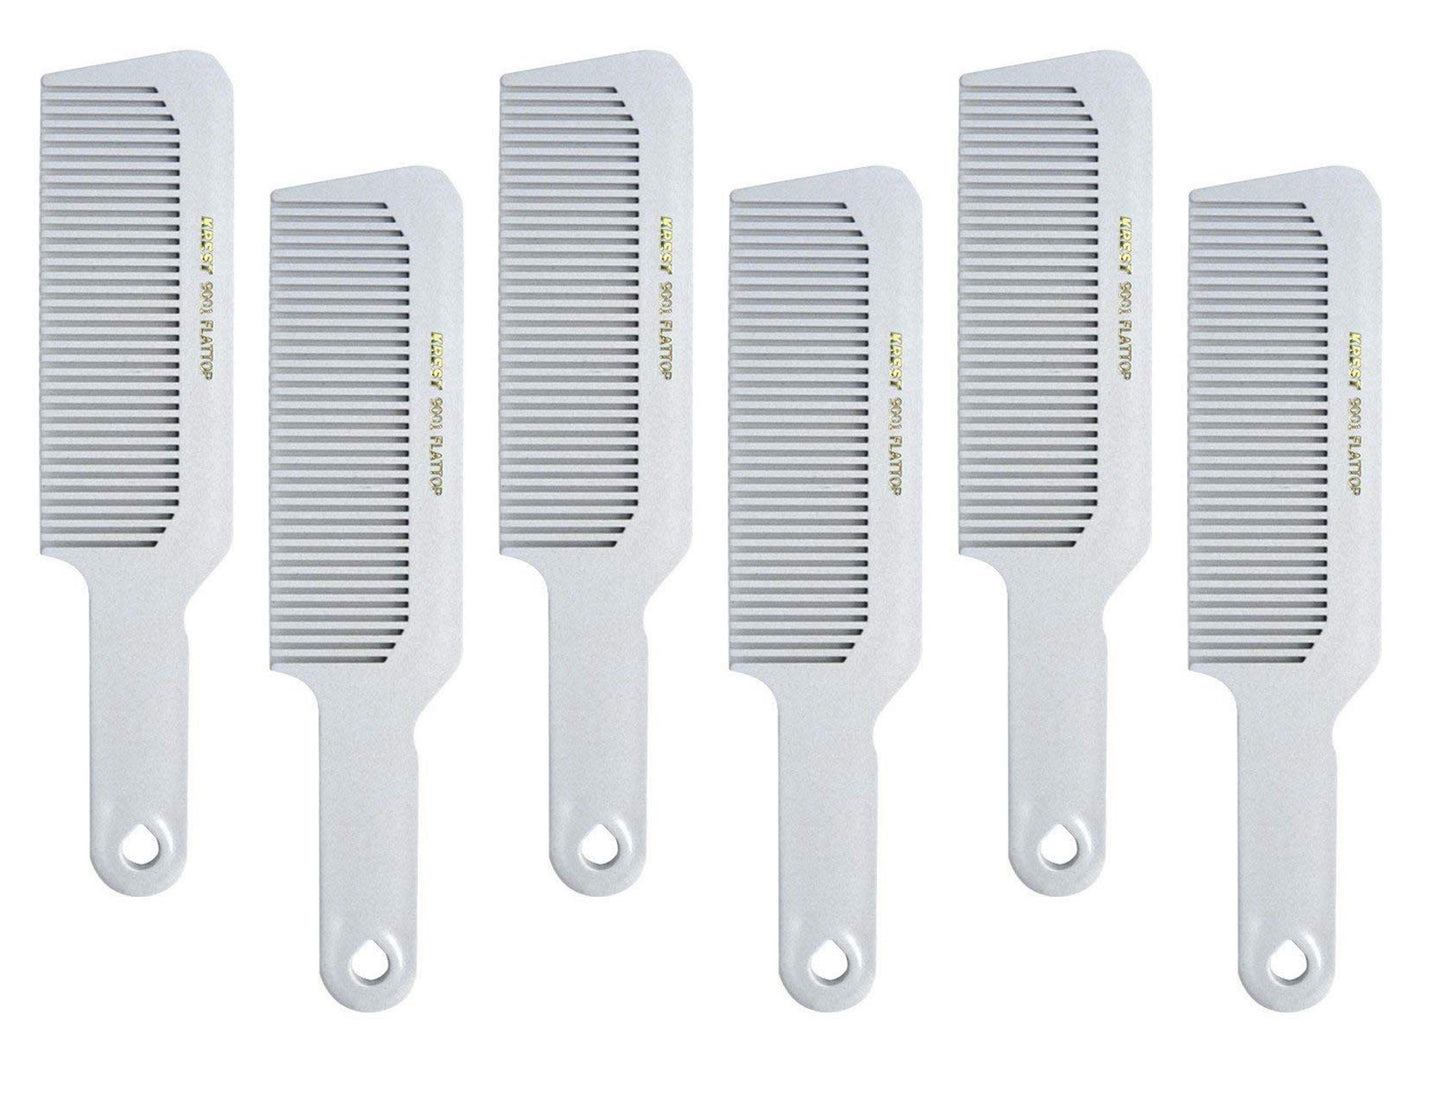 Krest Comb 8 3/4 Flattop Hair Cutting Comb. Barber’s Hairdresser comb. model 9001. 6 Combs